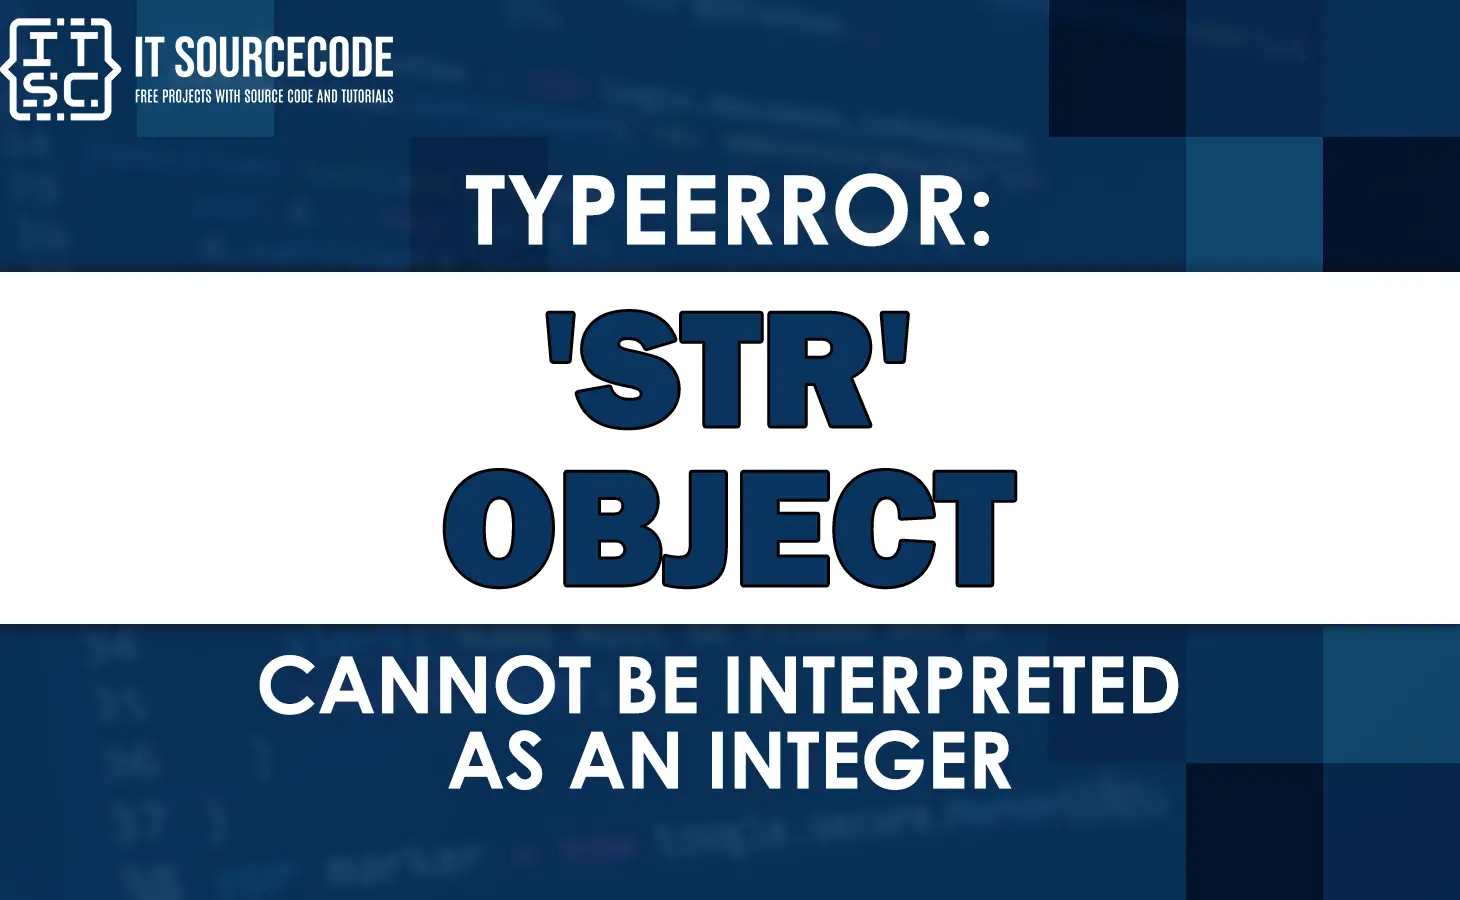 Typeerror: 'str' object cannot be interpreted as an integer